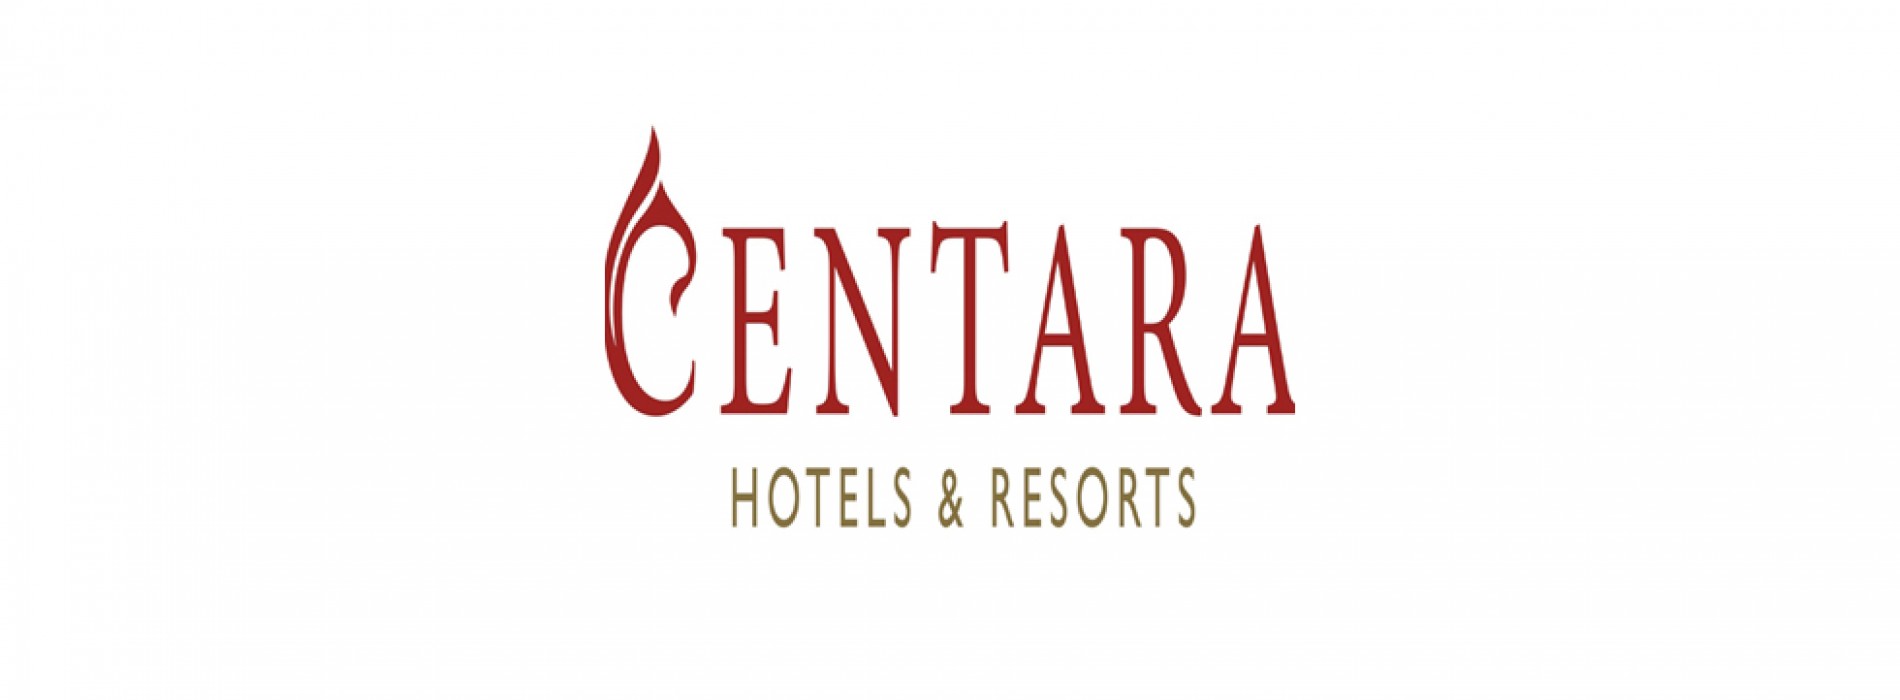 Centara Nova Hotel & Spa Pattaya took home Green Hotel Gold Award 2016